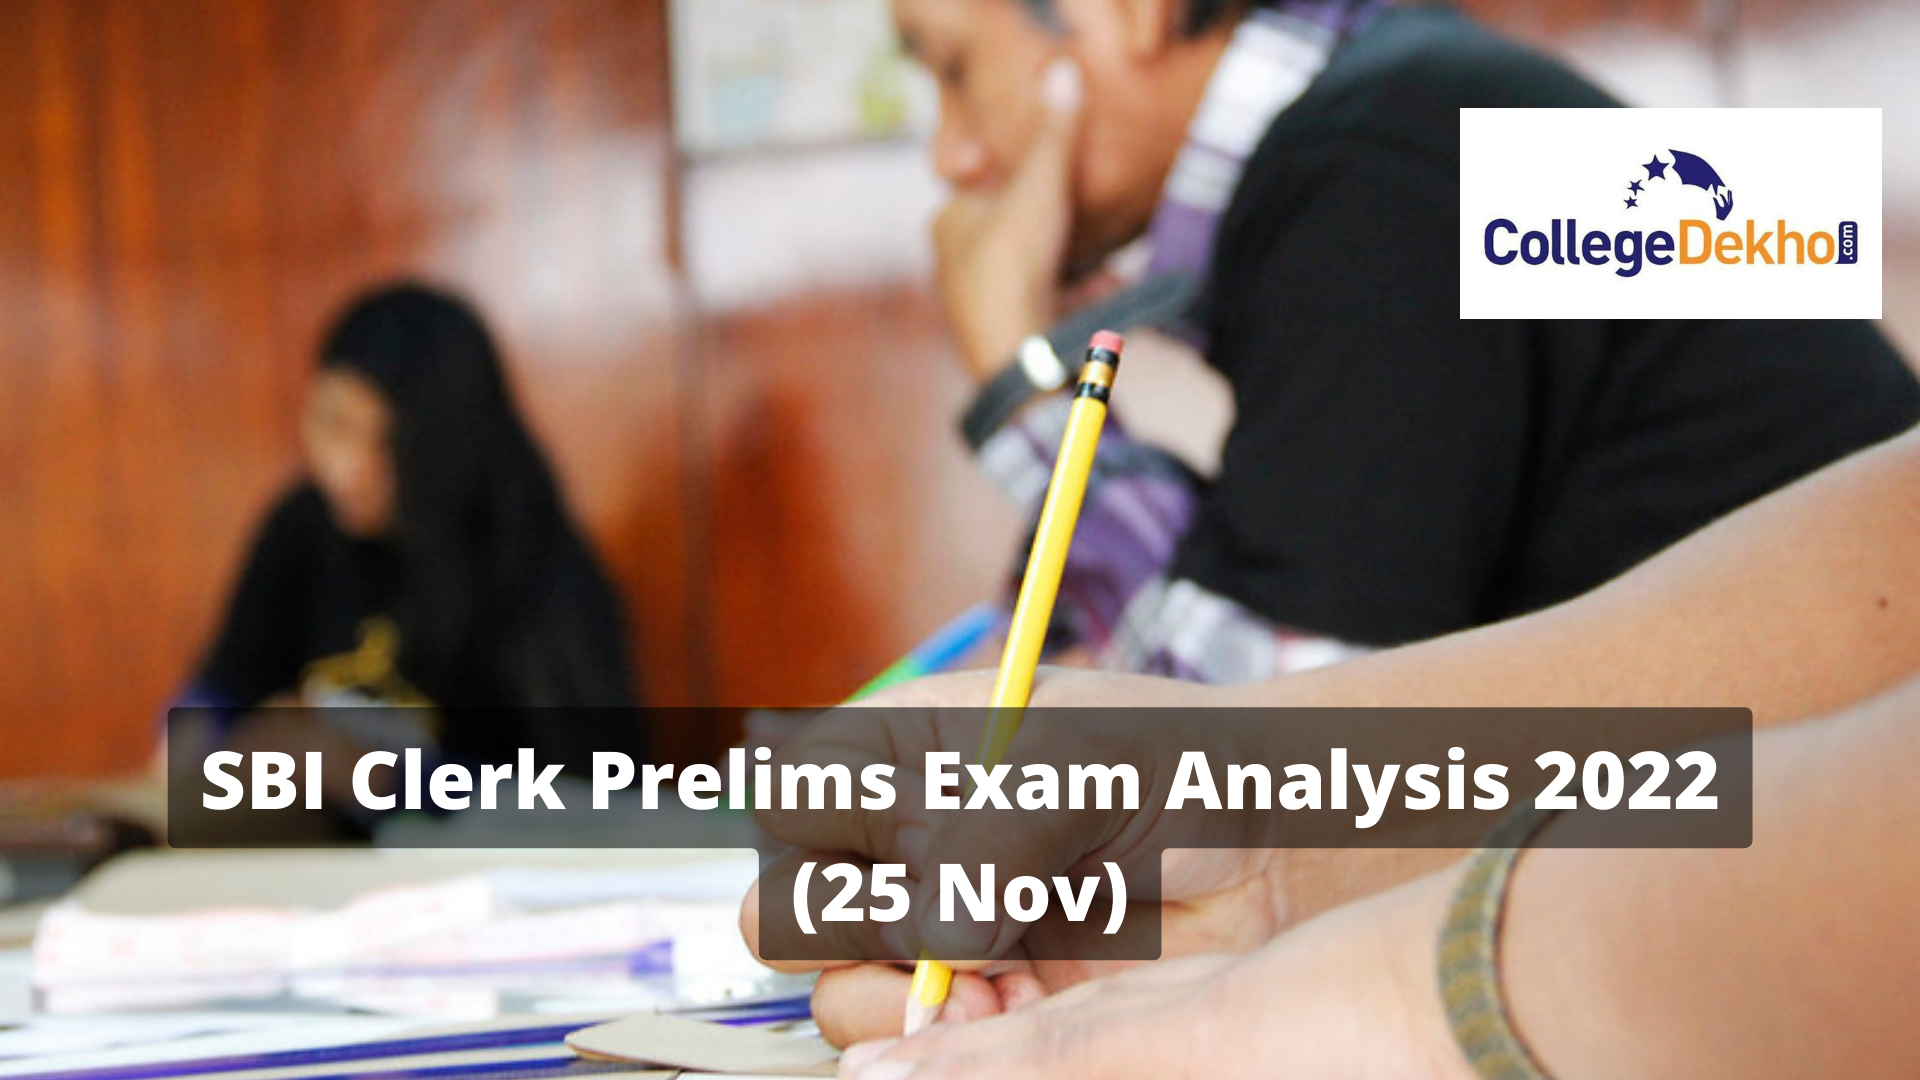 SBI Clerk Prelims Exam Analysis 2022 (25 Nov) for all shifts